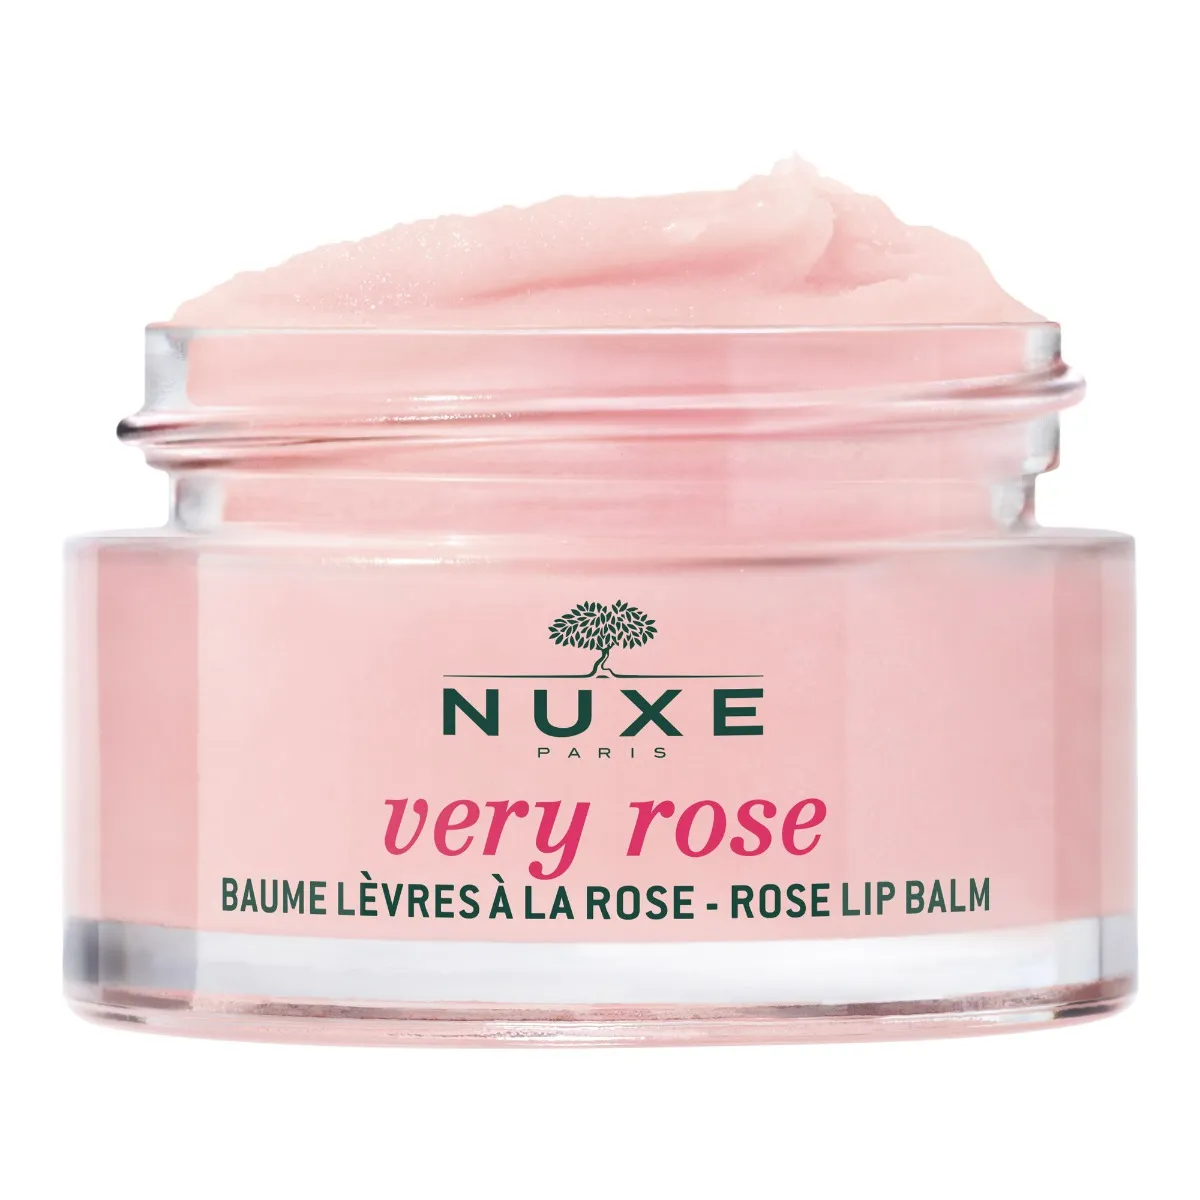 Nuxe Very Rose, różany balsam do ust, 15 g 